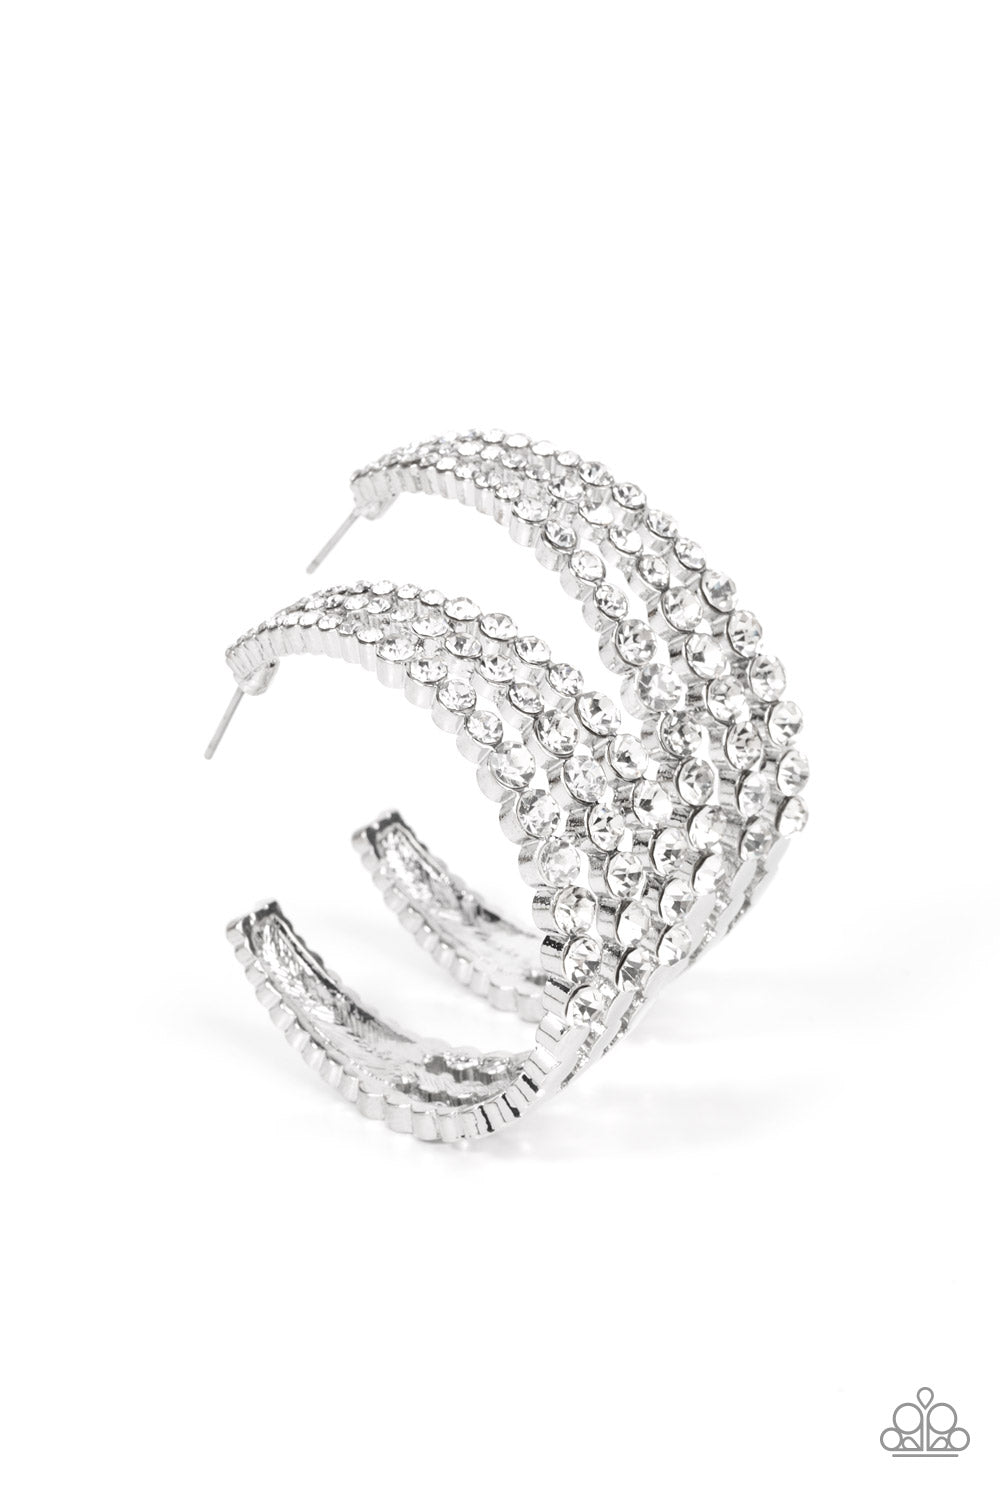 Cosmopolitan Cool - White Earrings 🎉 Spring 2022 Exclusive - Princess Glam Shop